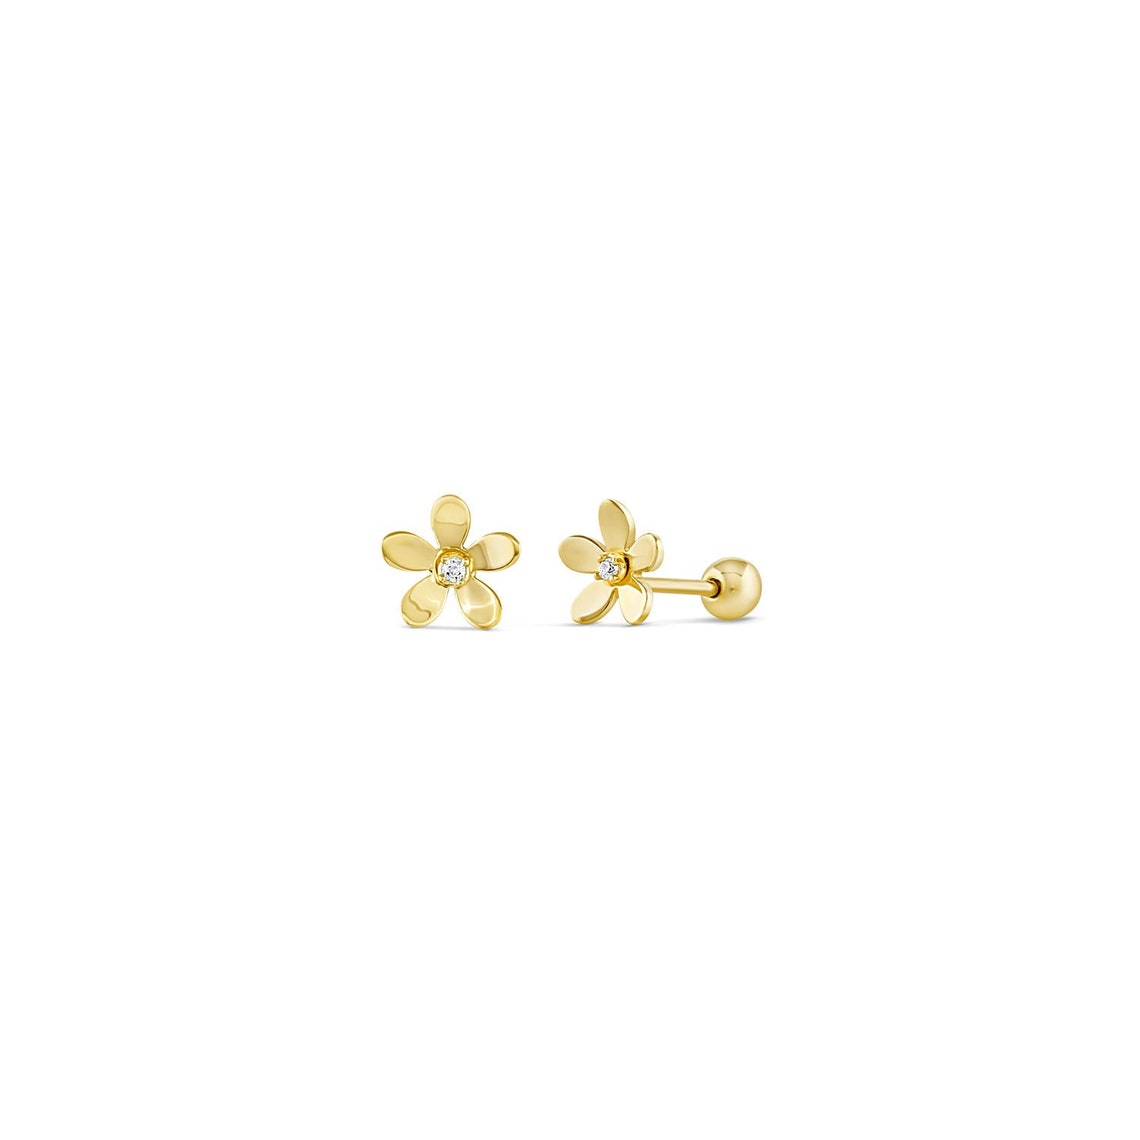 14K Solid Gold Flower Earrings Stud Tiny Minimalist CZ Crystal - Etsy